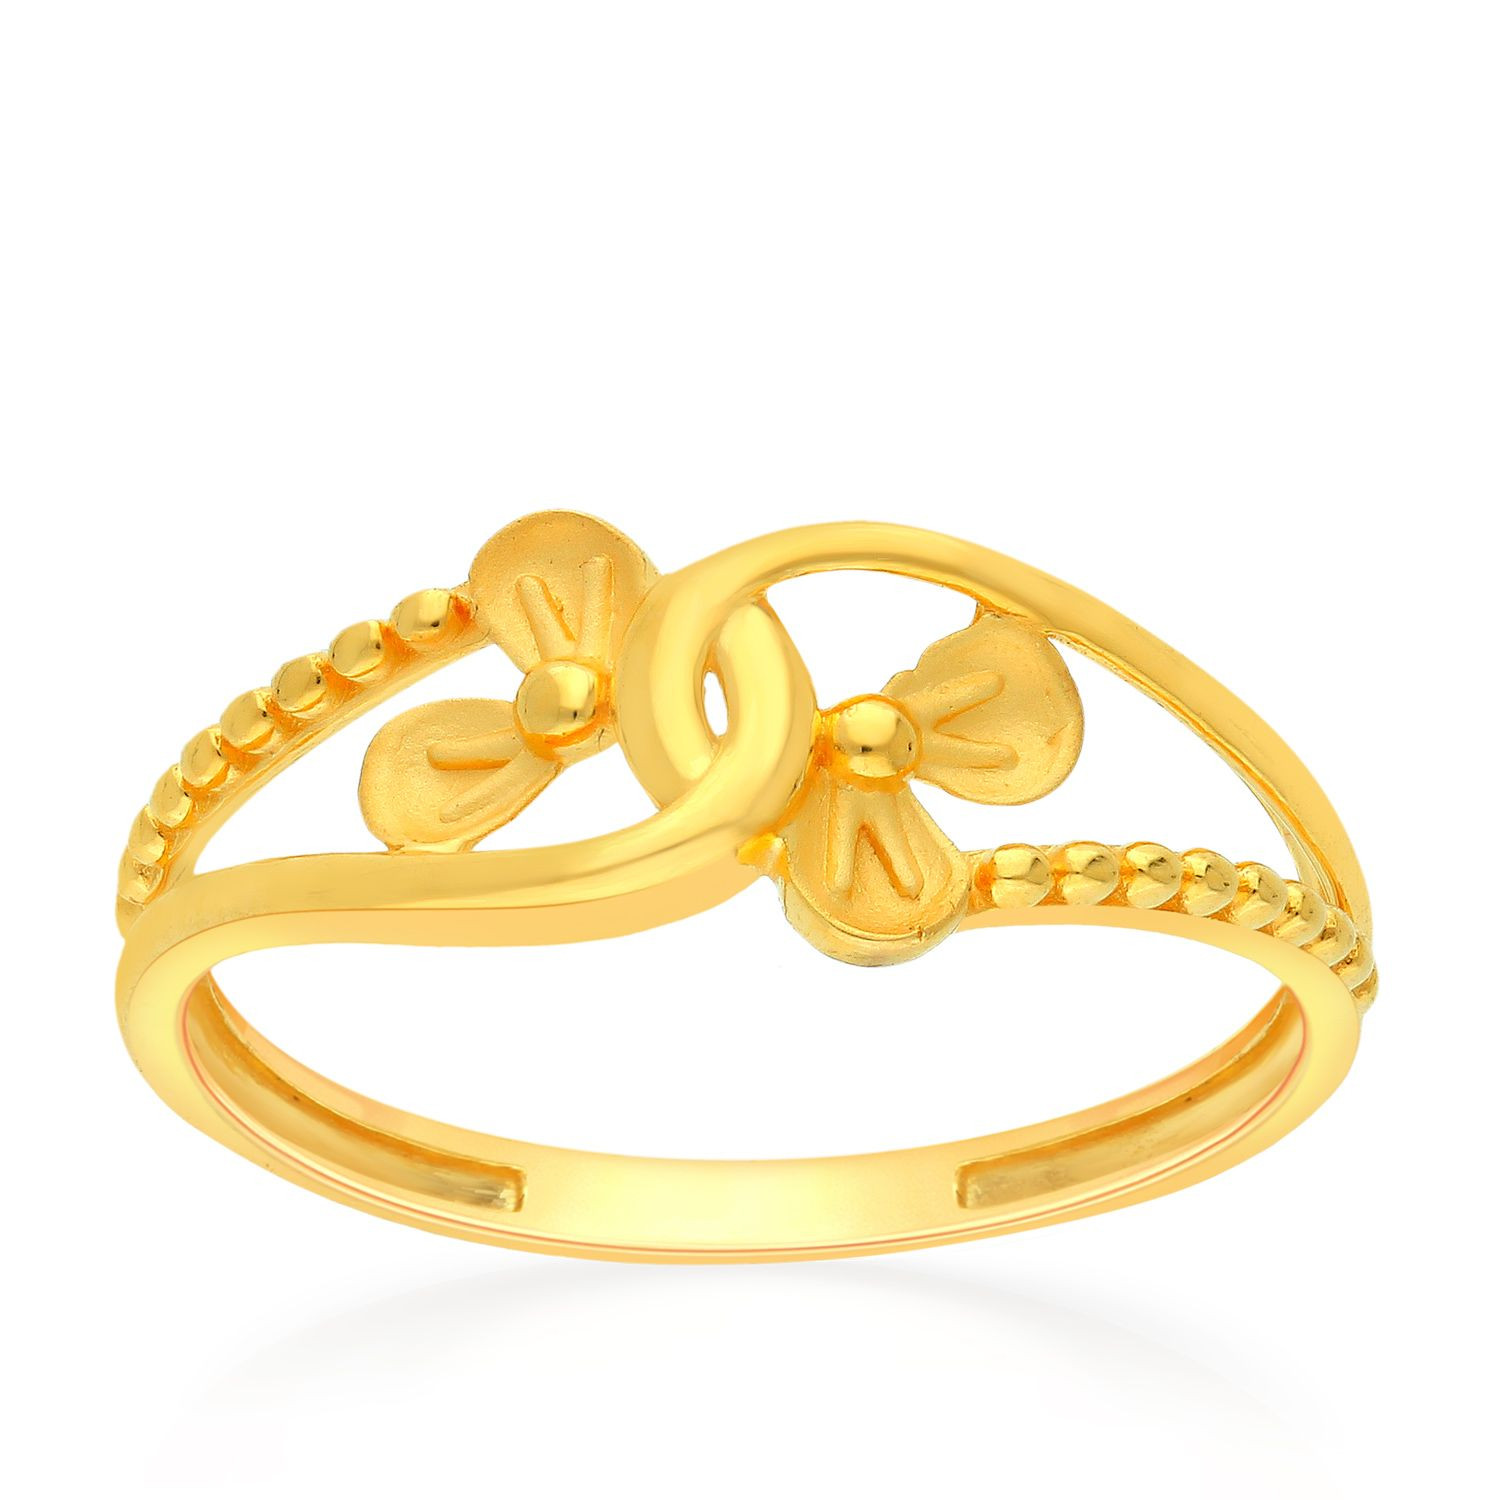 Malabar Gold Ring SKPLR6504